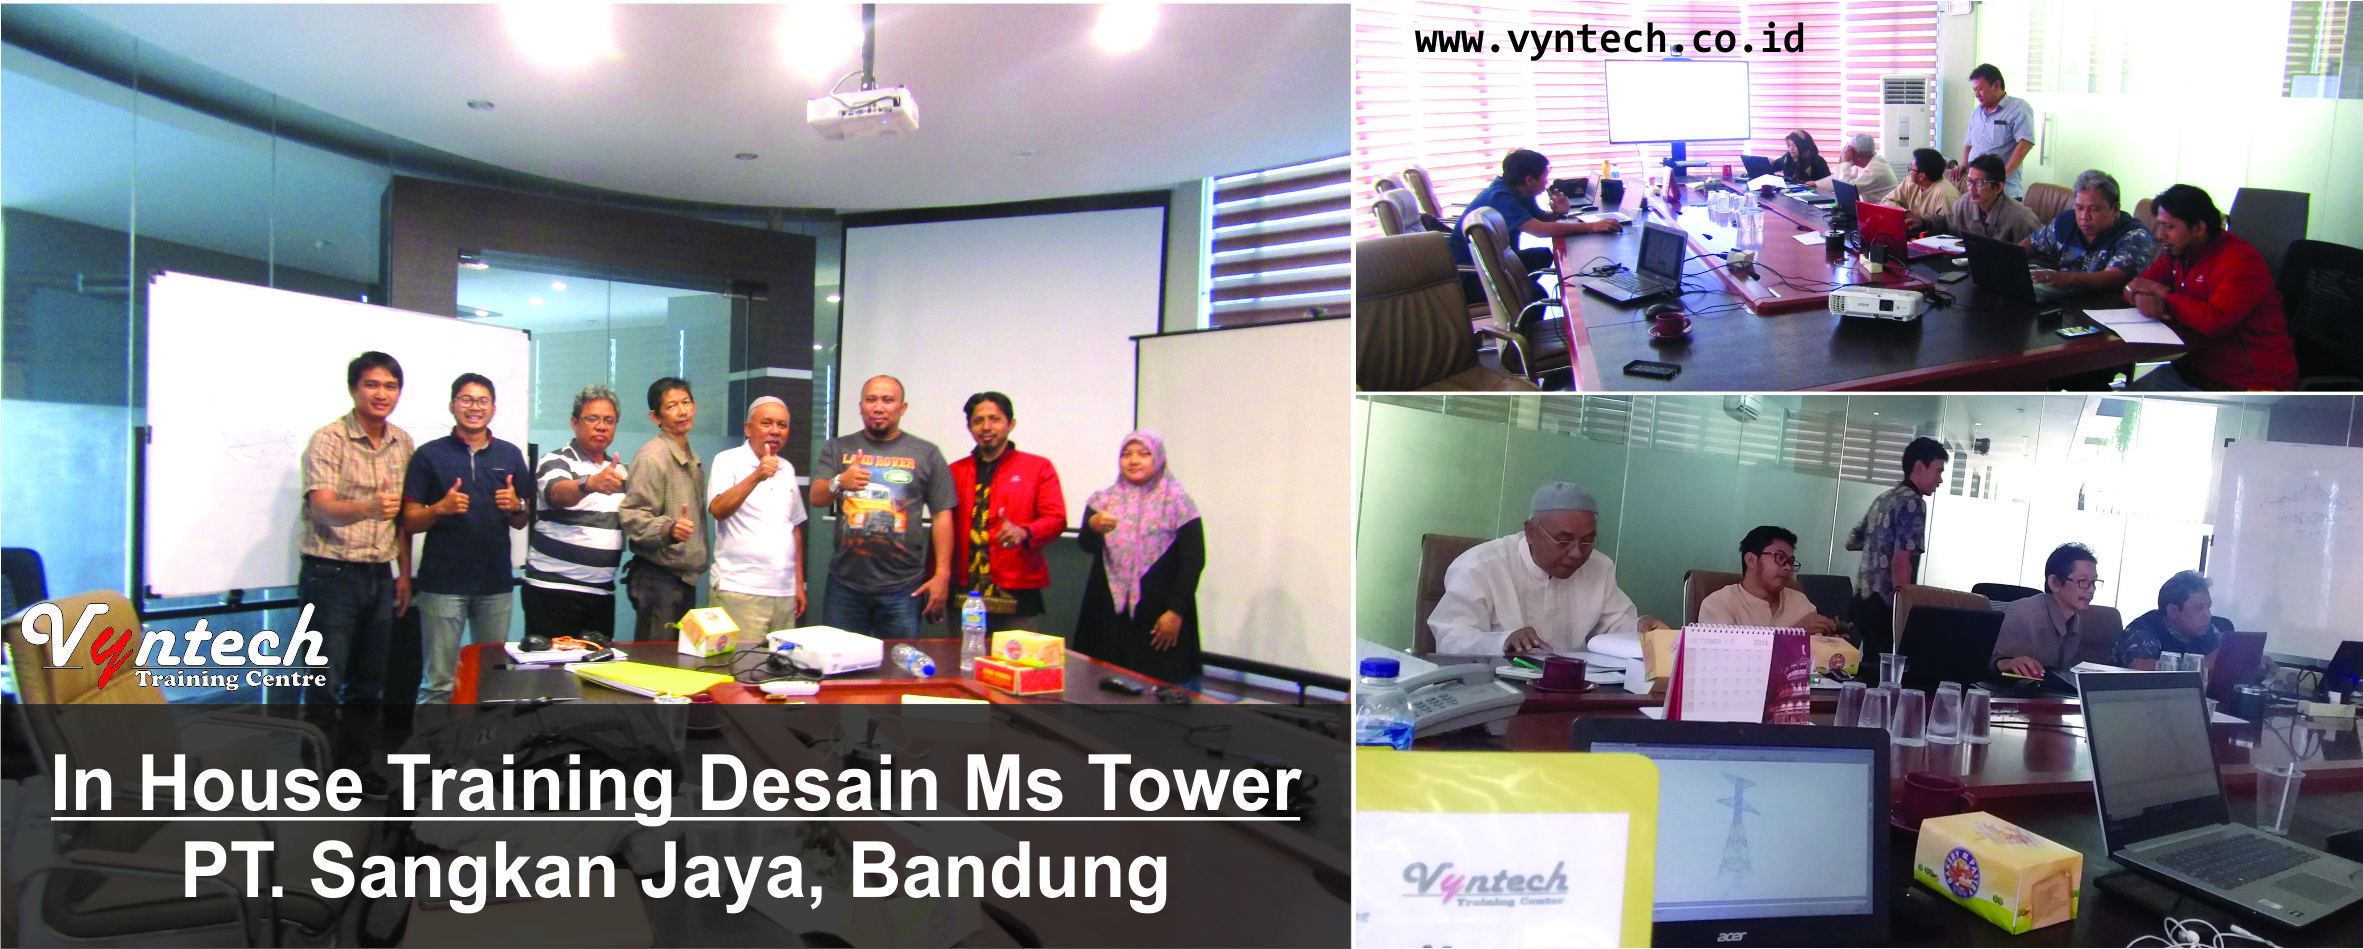 20180928 Training IHT Desain Ms Tower - PT. Sangkan Jaya, Bandung